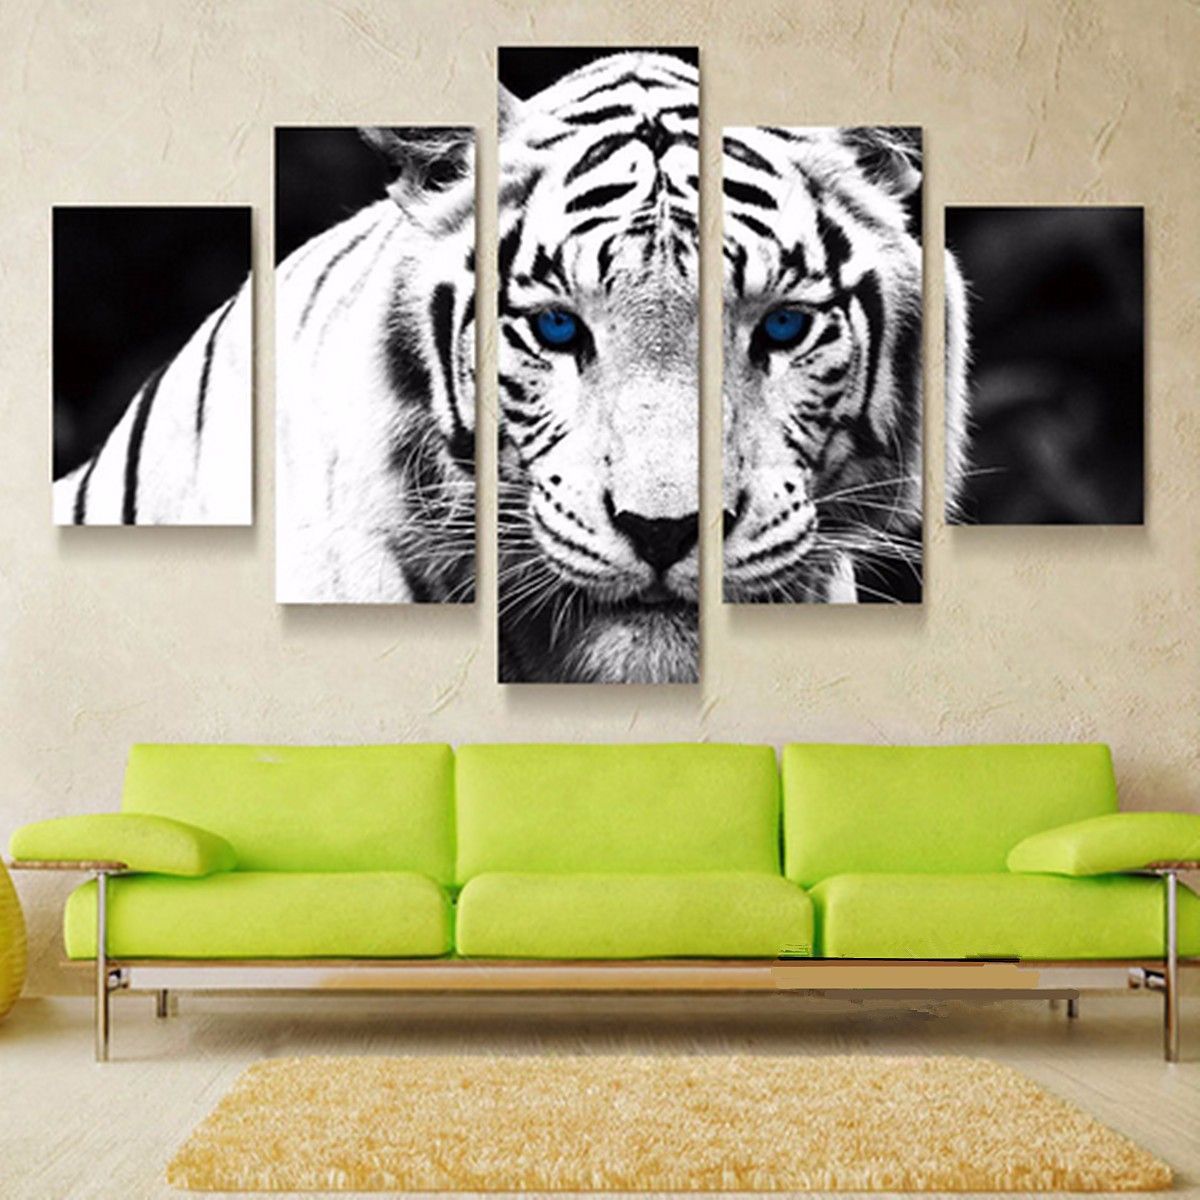 5PcsSet-Modern-Art-Oil-Canvas-Painting-Print-Tiger-Wallpaper-Wall-Sticker-Home-Decorations-1479052